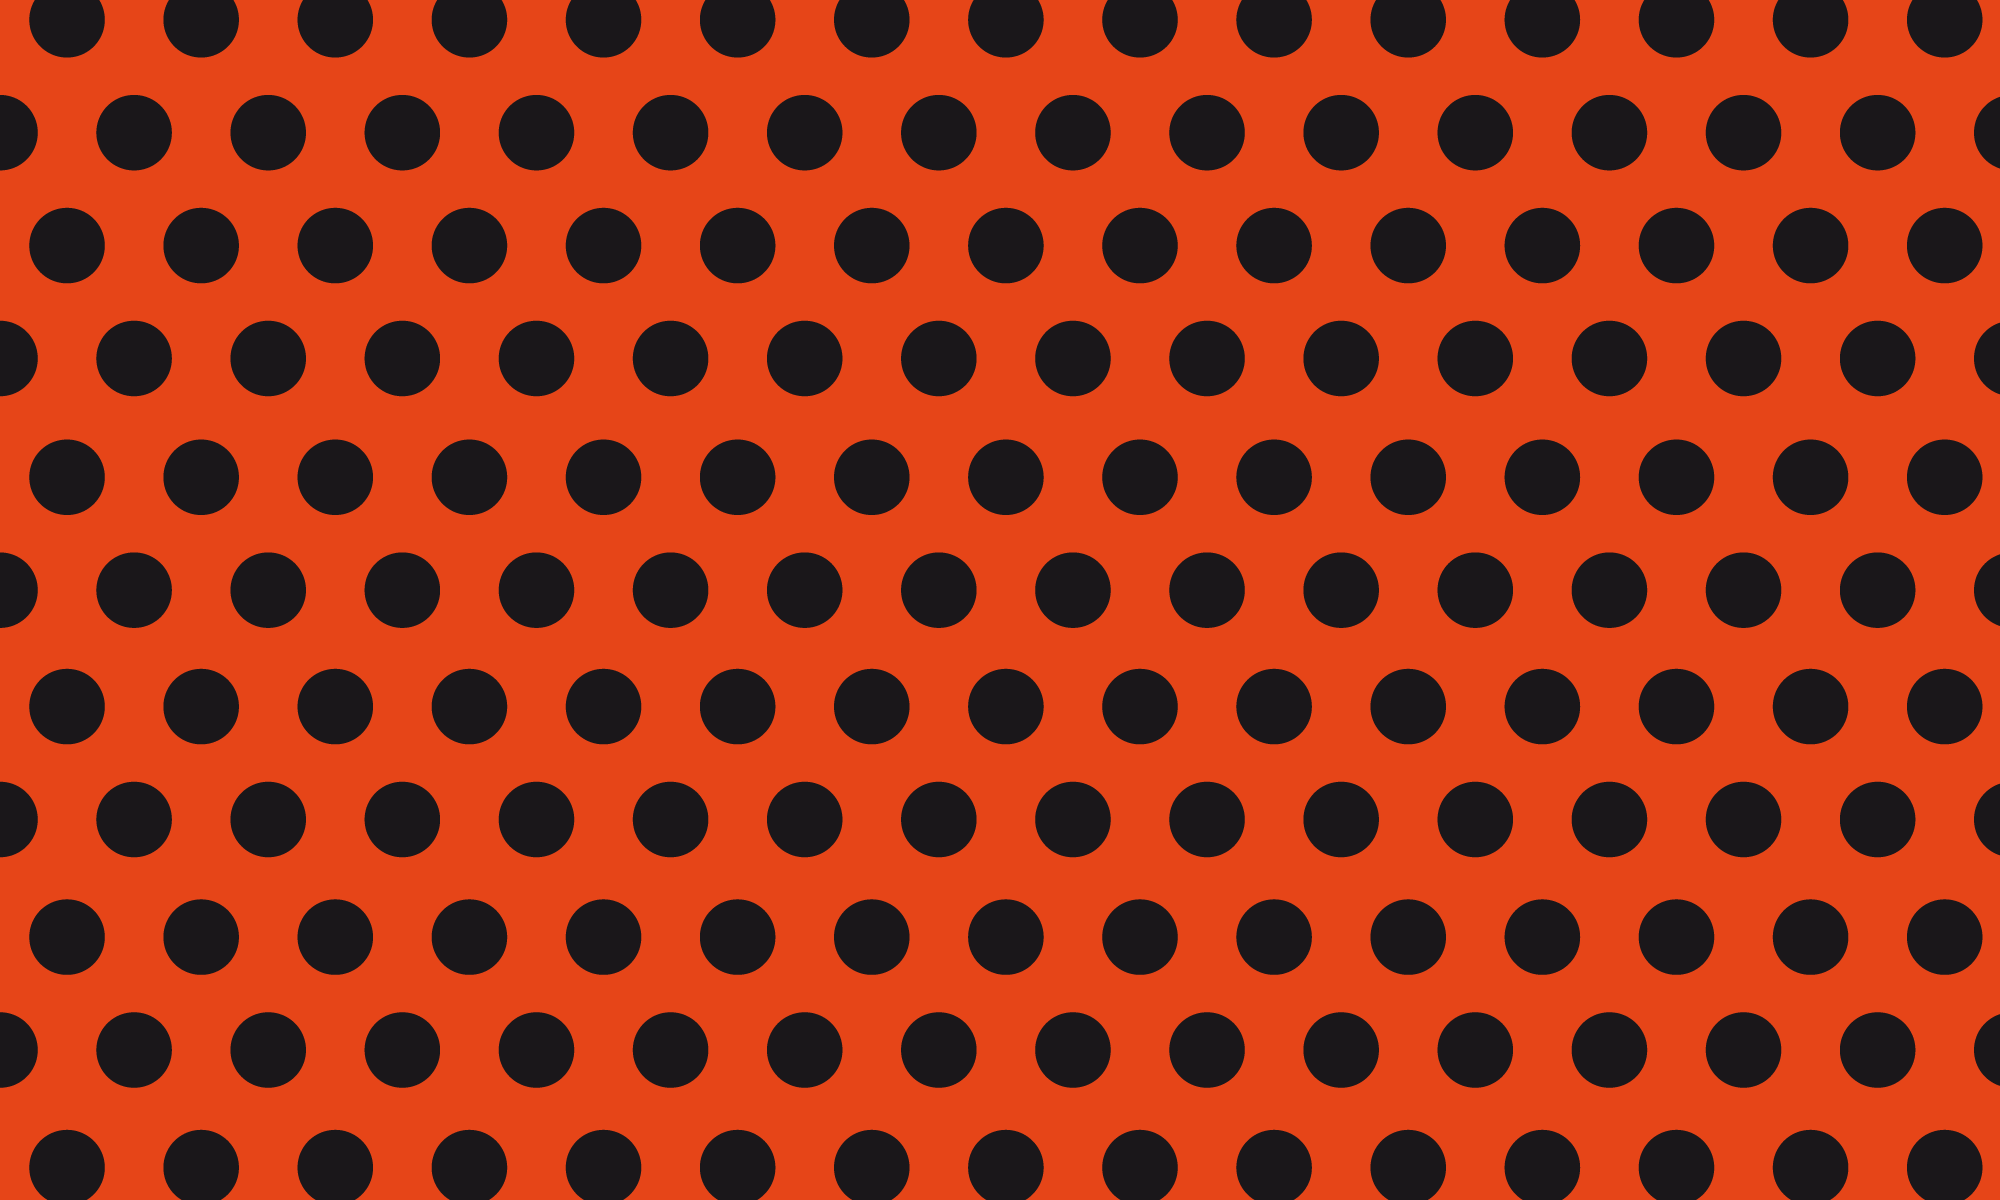 famenco pattern black dots on red cloth